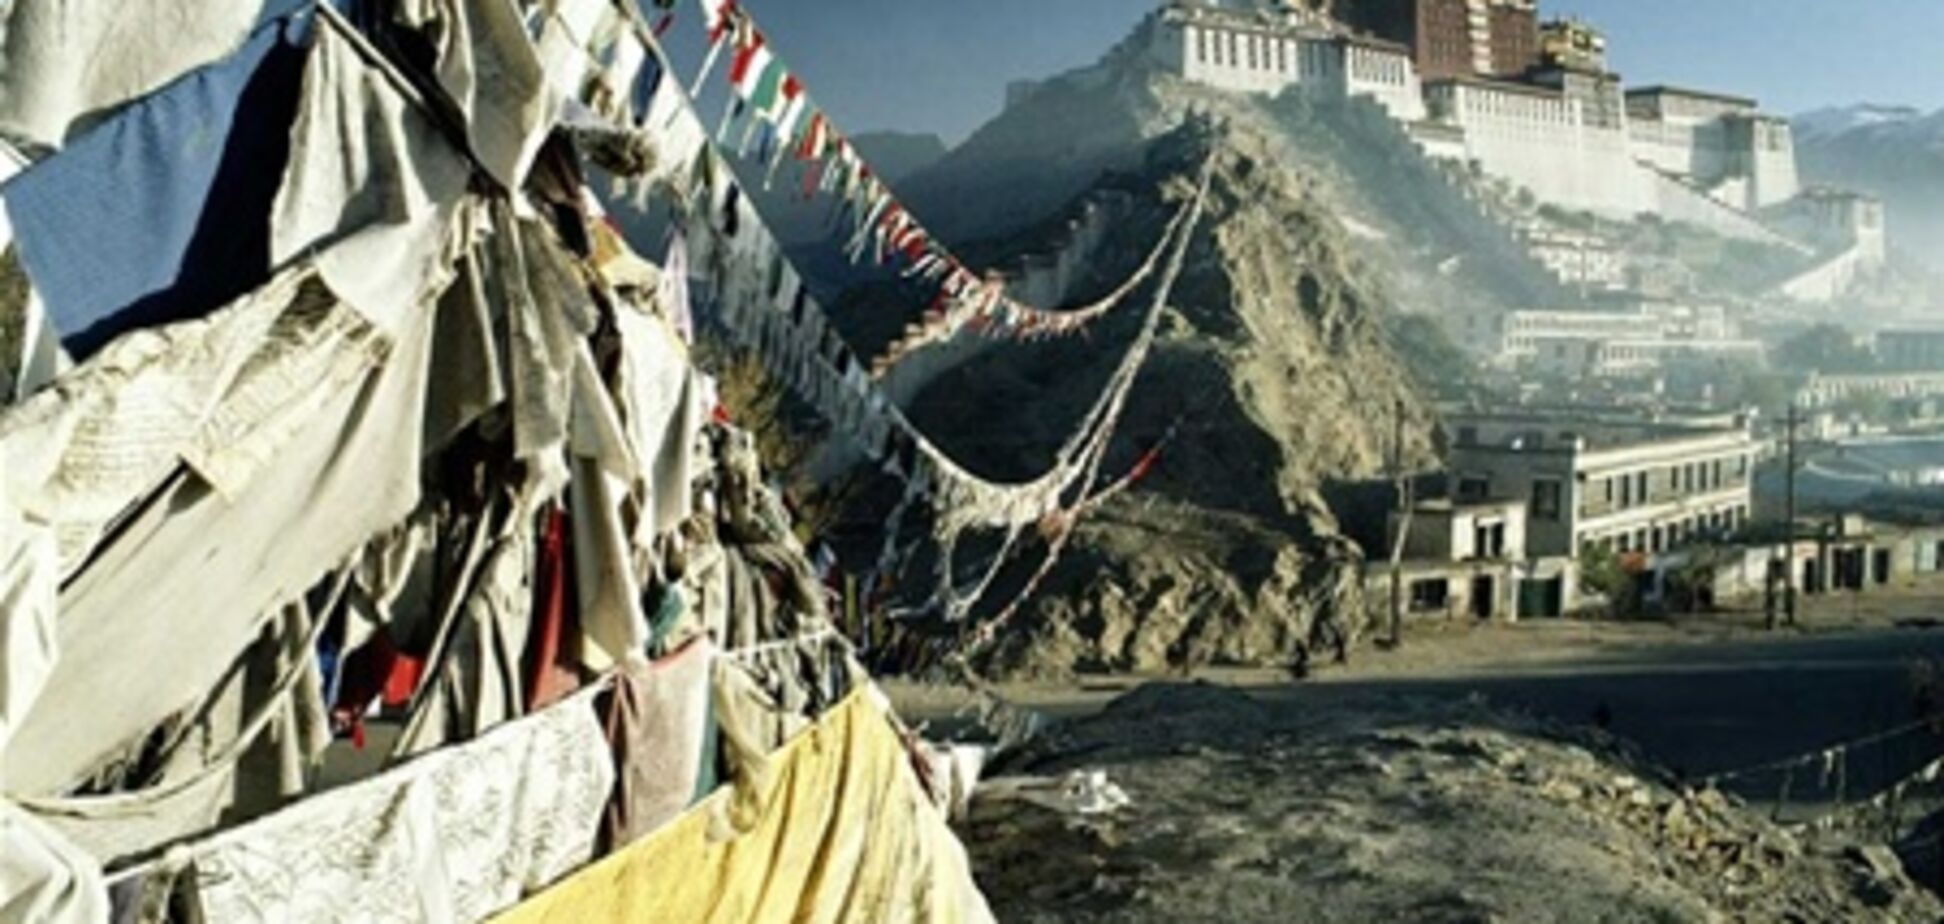 Древняя столица Тибета Лхаса станет туристическим центром